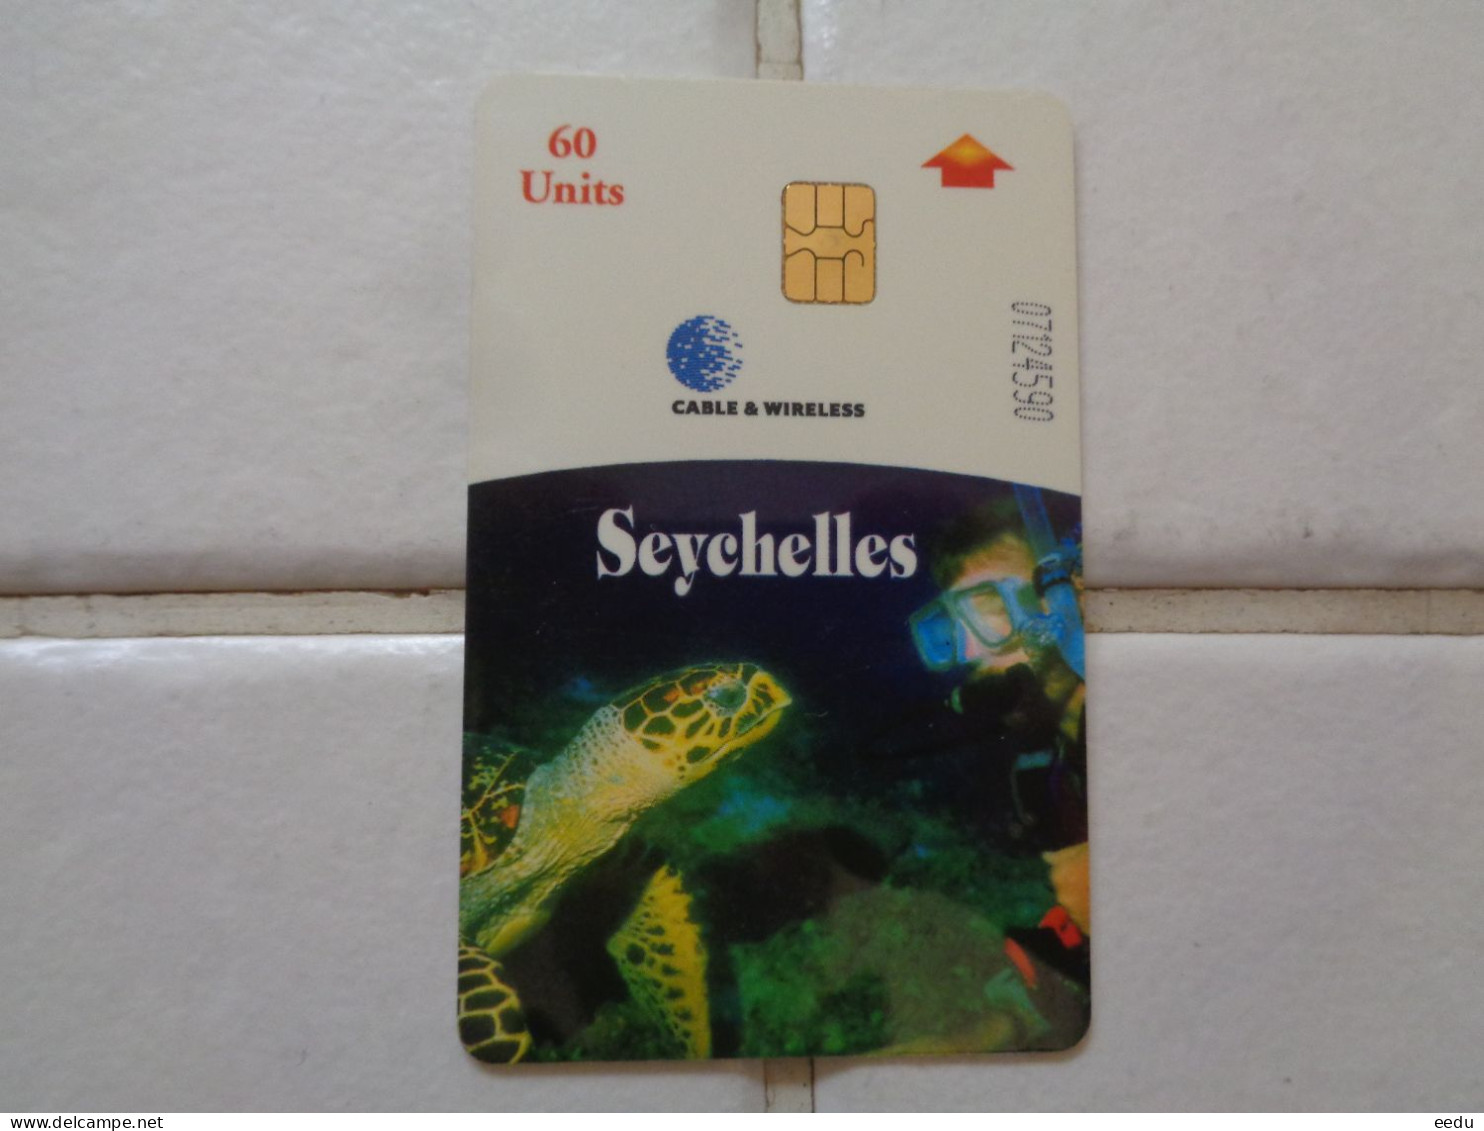 Seychelles Phonecard - Seychellen